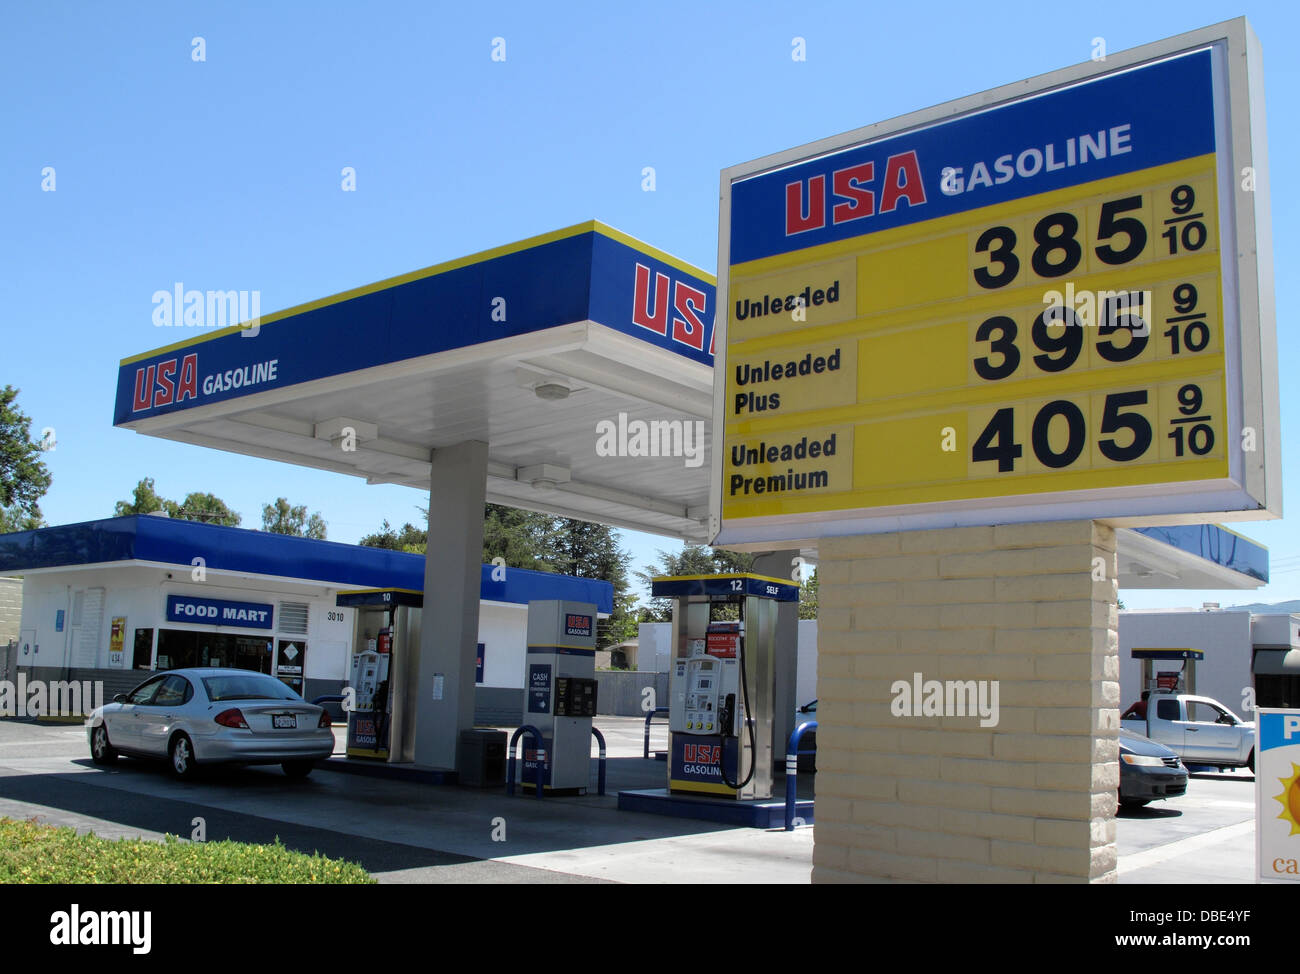 USA Gasoline station in San Jose, California Stock Photo